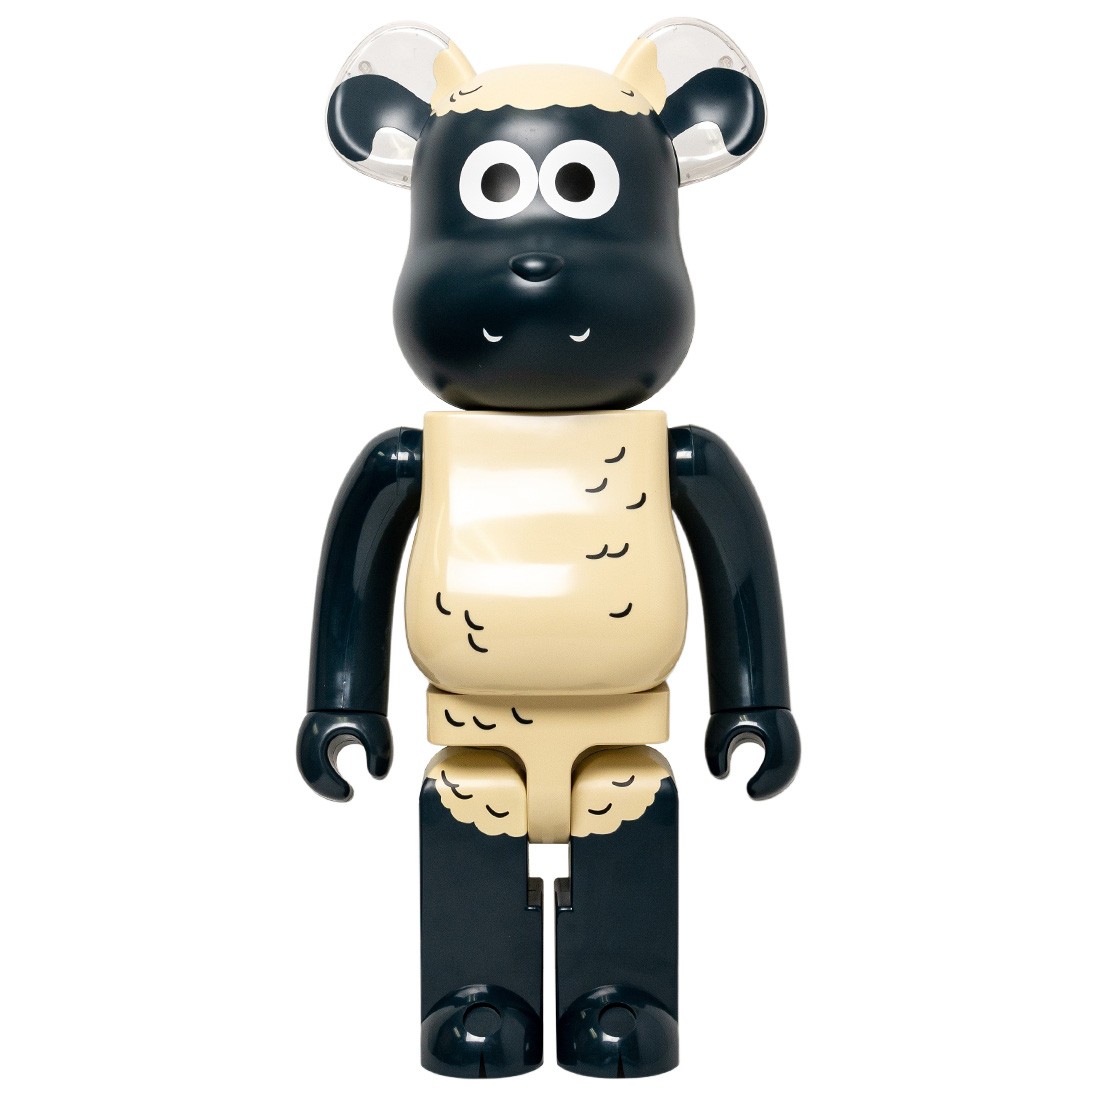 Medicom Aardman Shaun The Sheep 1000% Bearbrick Figure (black)